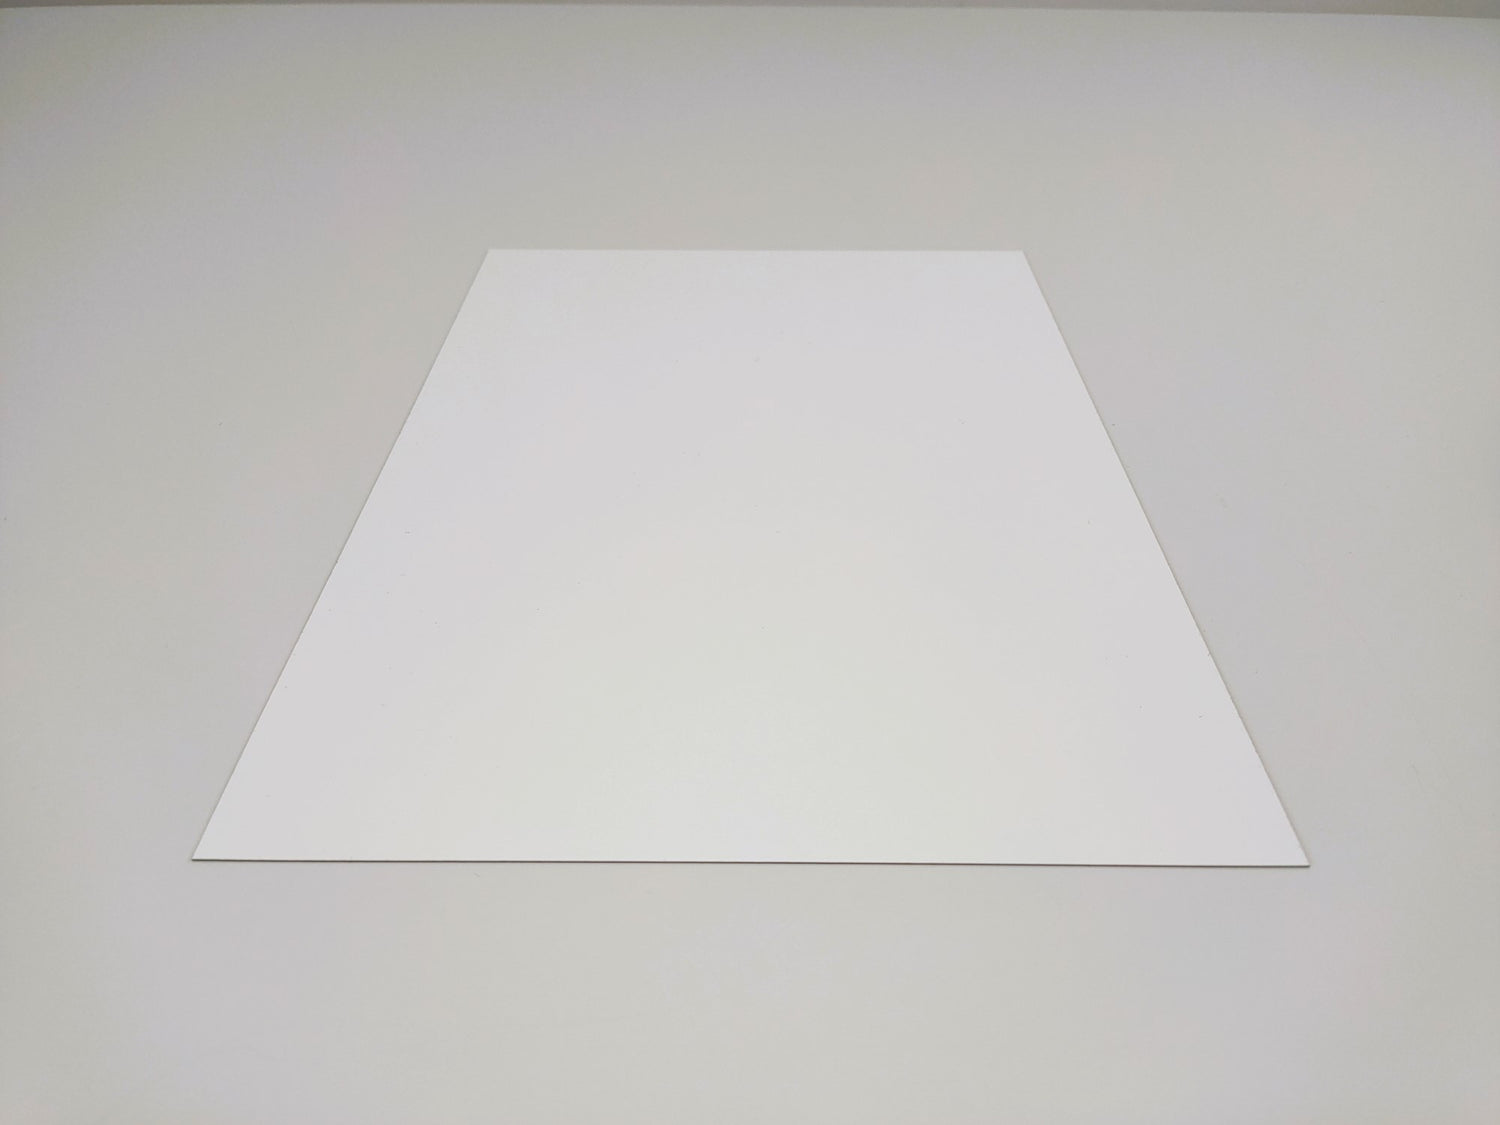 Feuille A3 (42 x 30 cm) électroluminescente (blanc éteint/blanc allumé) -  INNOV ECLAIR